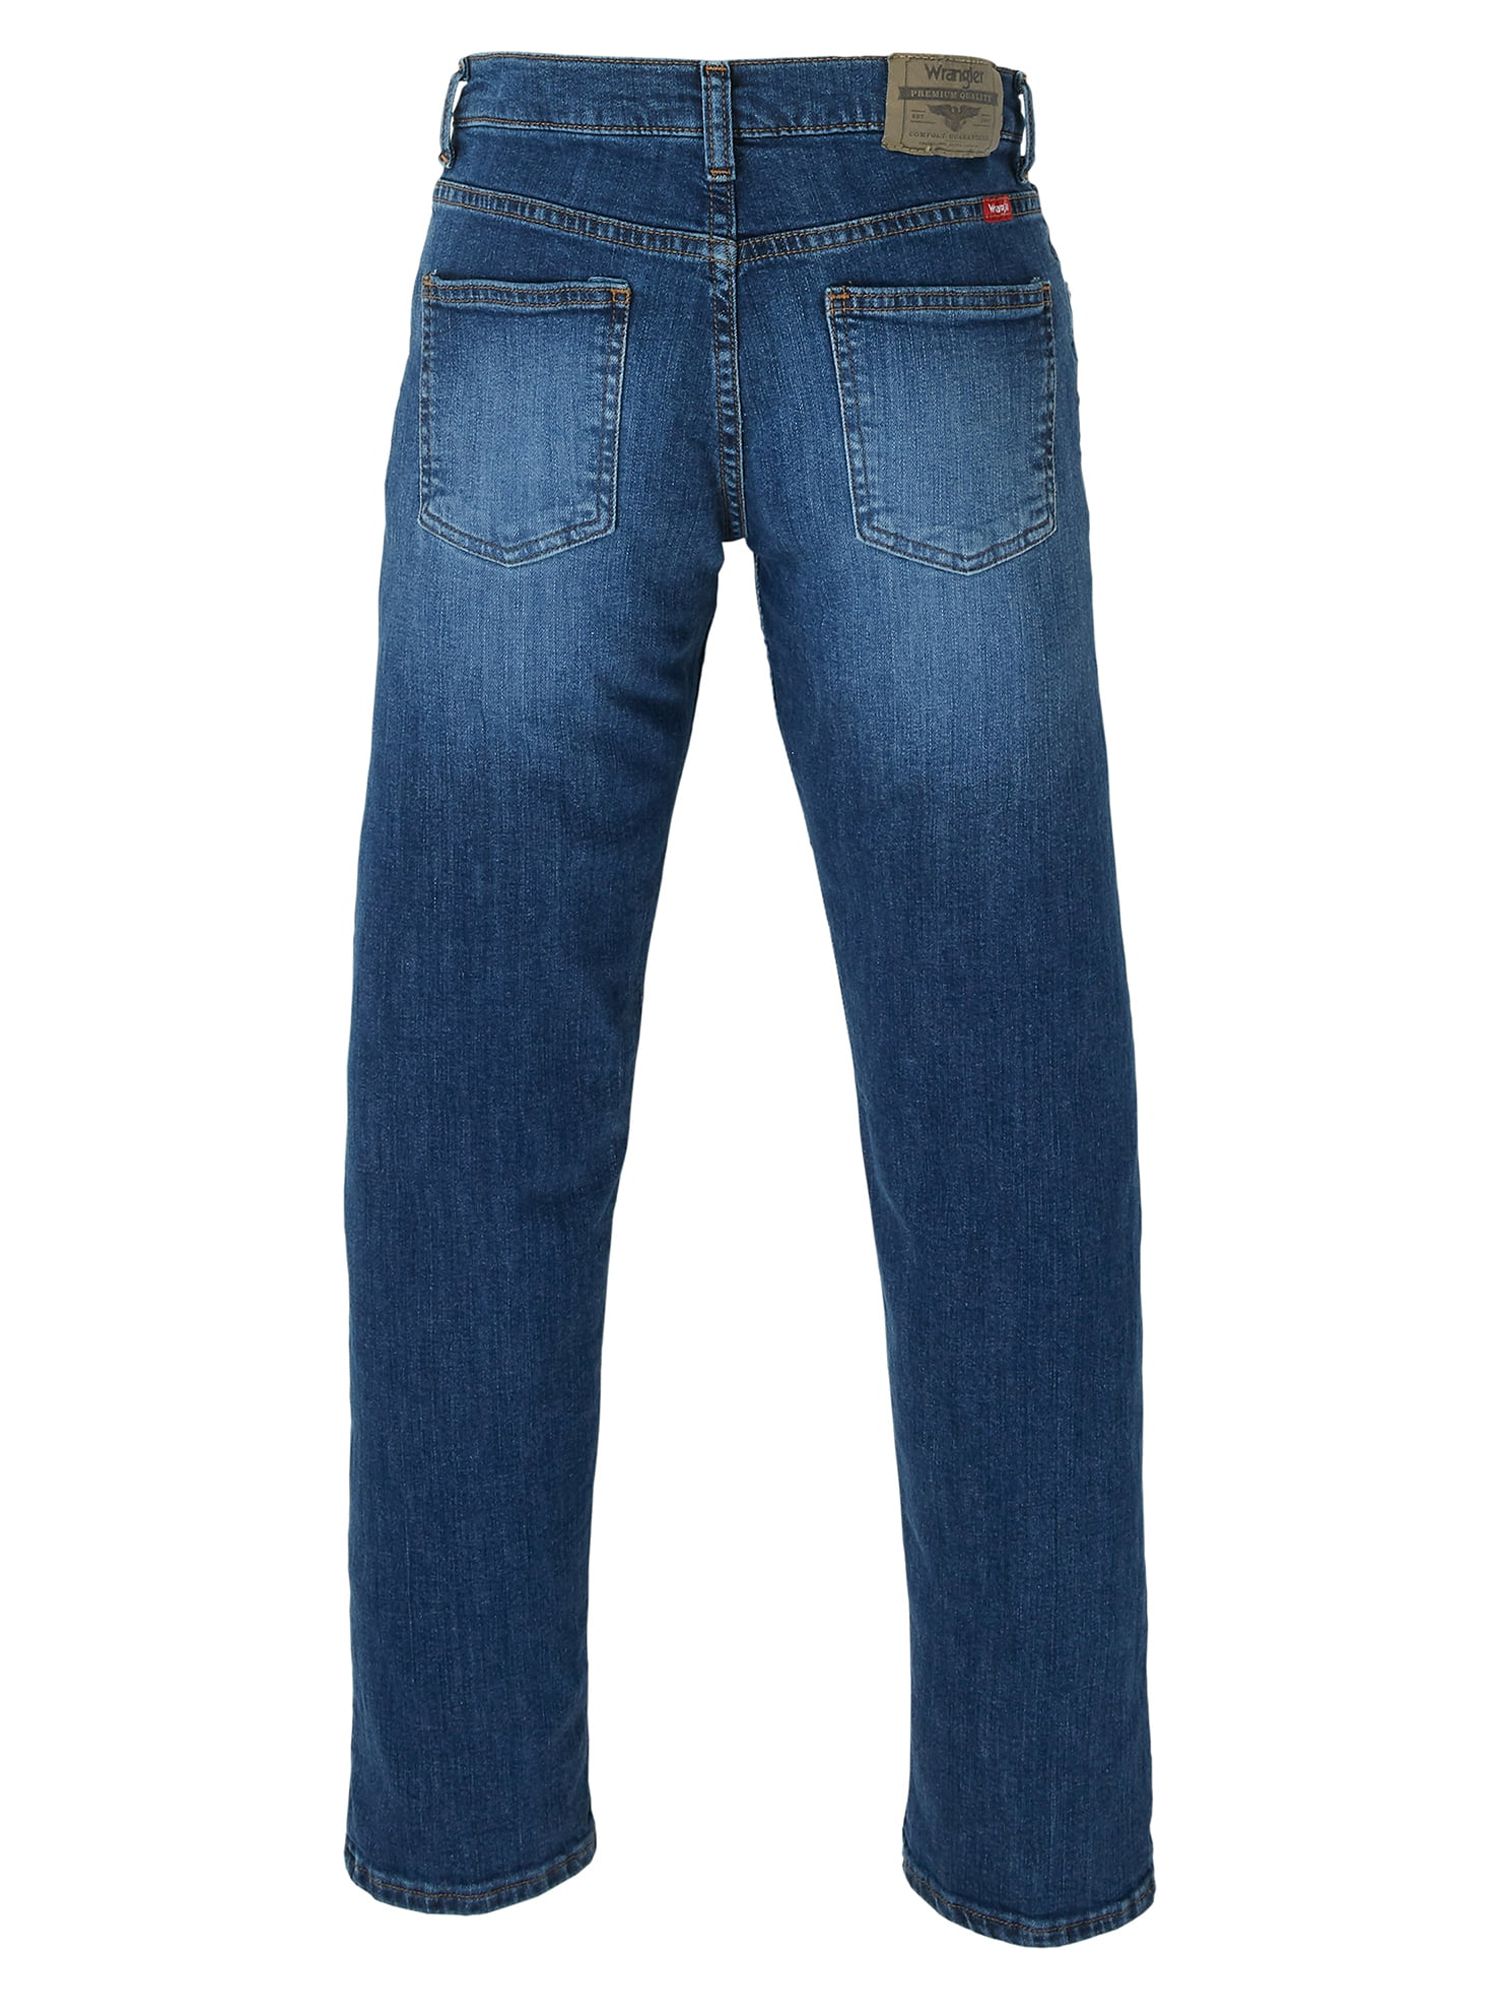 Wrangler Boys' 4-16 & Husky 5 Pocket Taper Fit Jeans - image 3 of 5